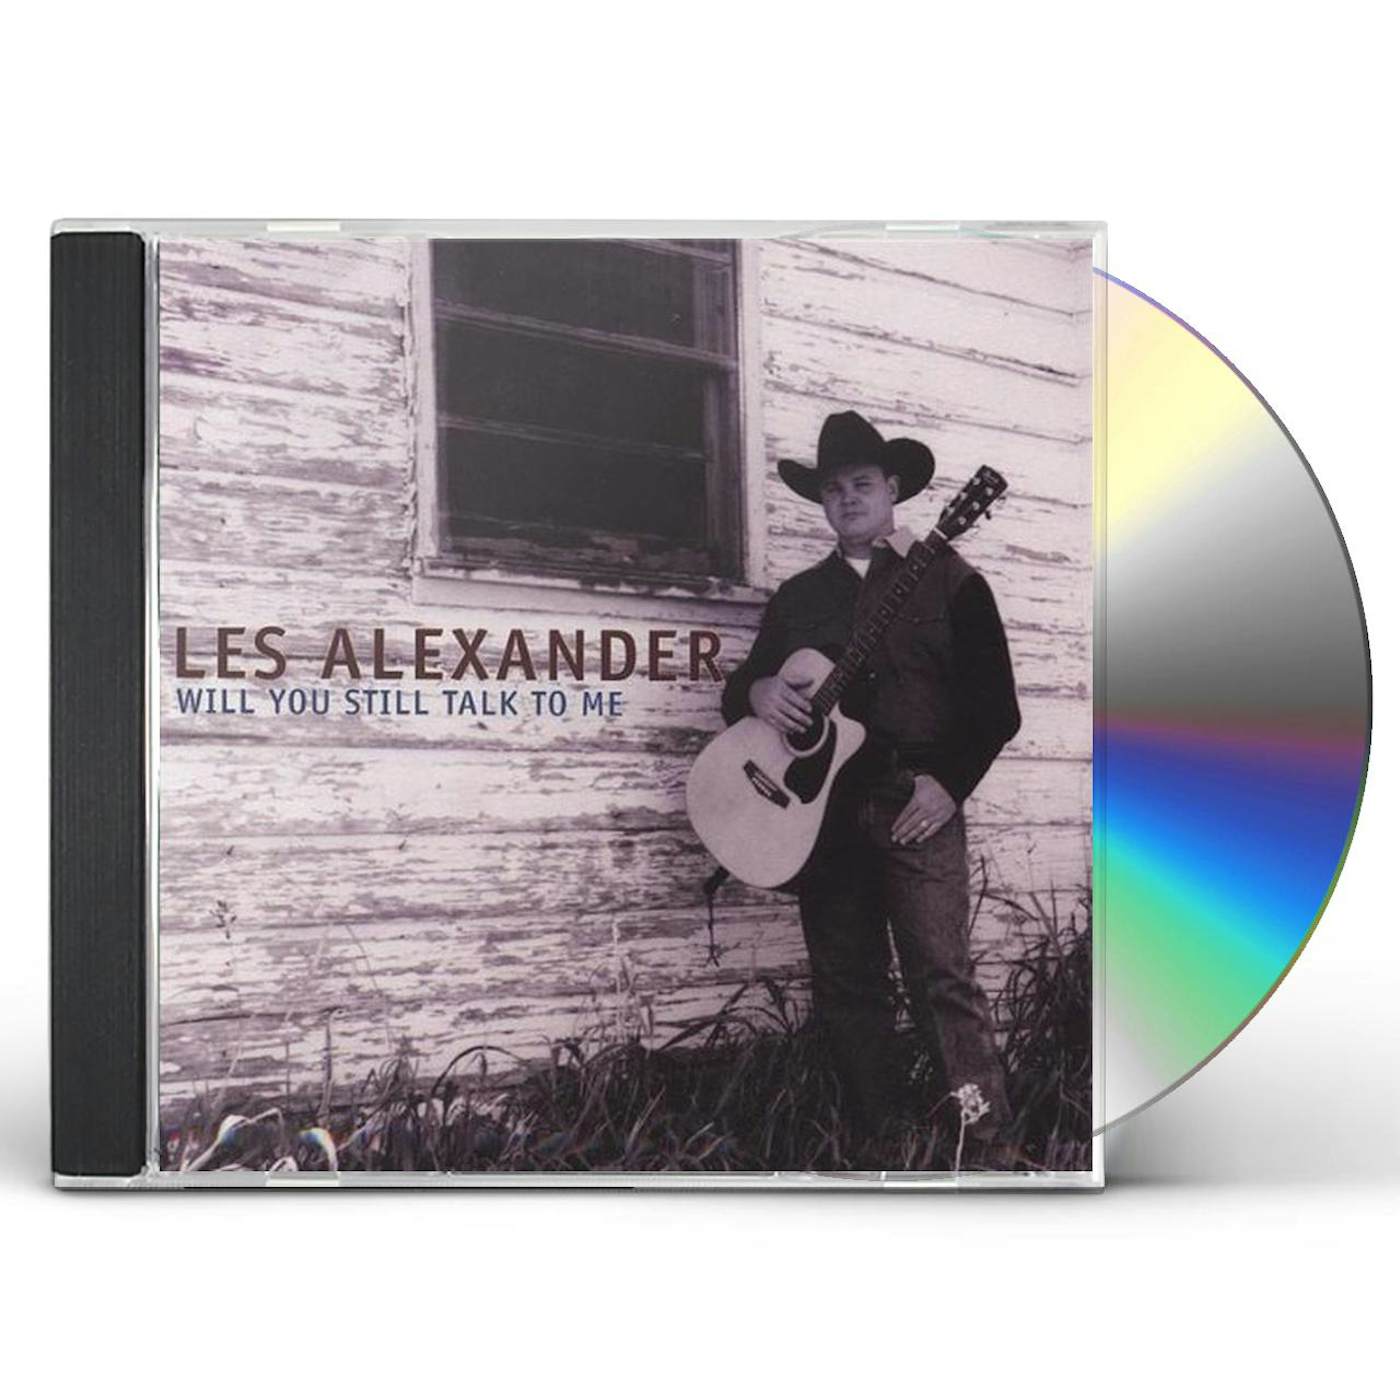 Les Alexander WILL YOU STILL TALK TO ME CD